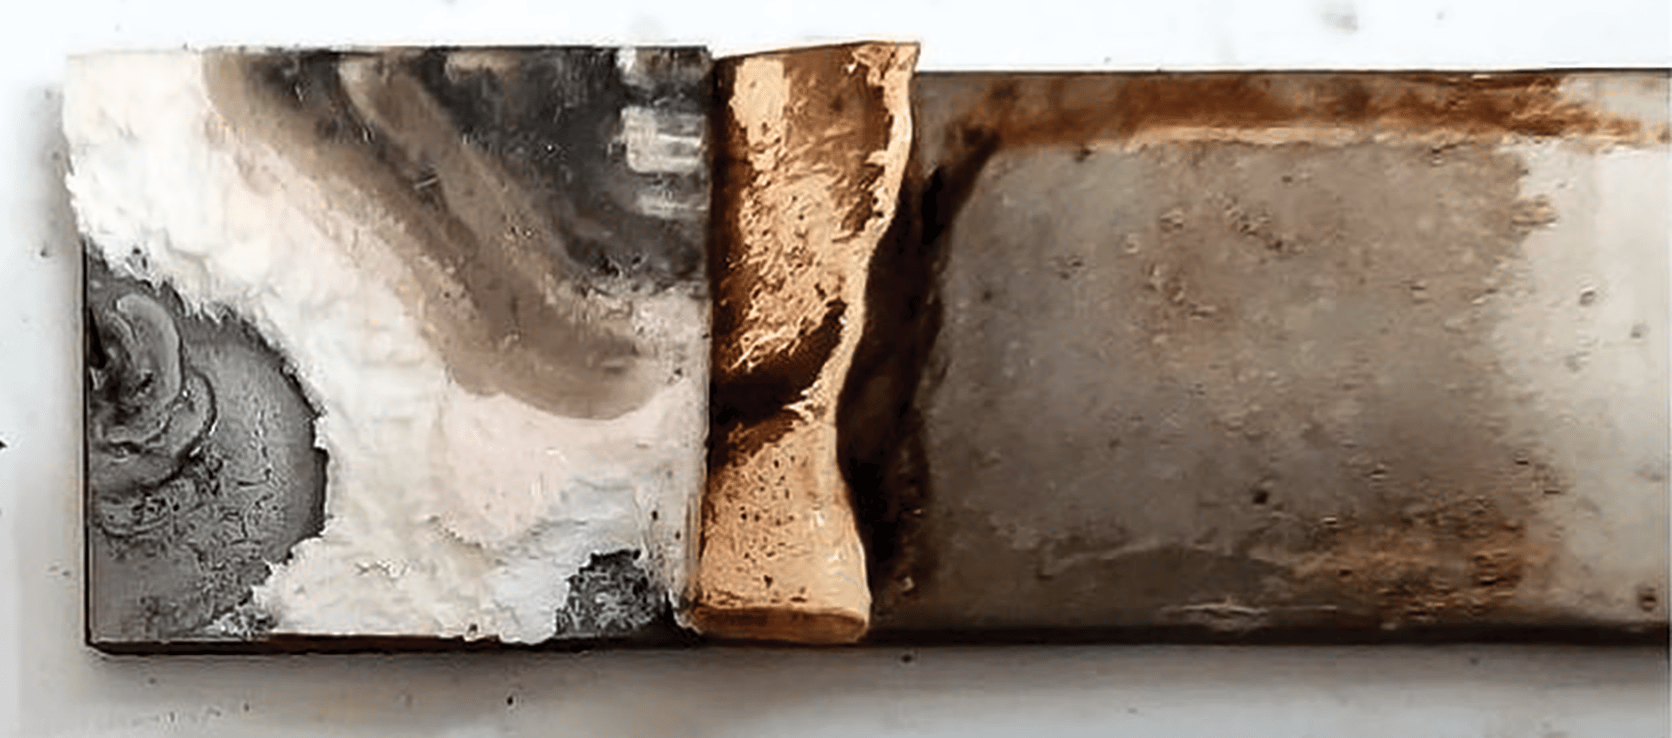 Corrosion observed deep in the bondlines of 316 steel metal